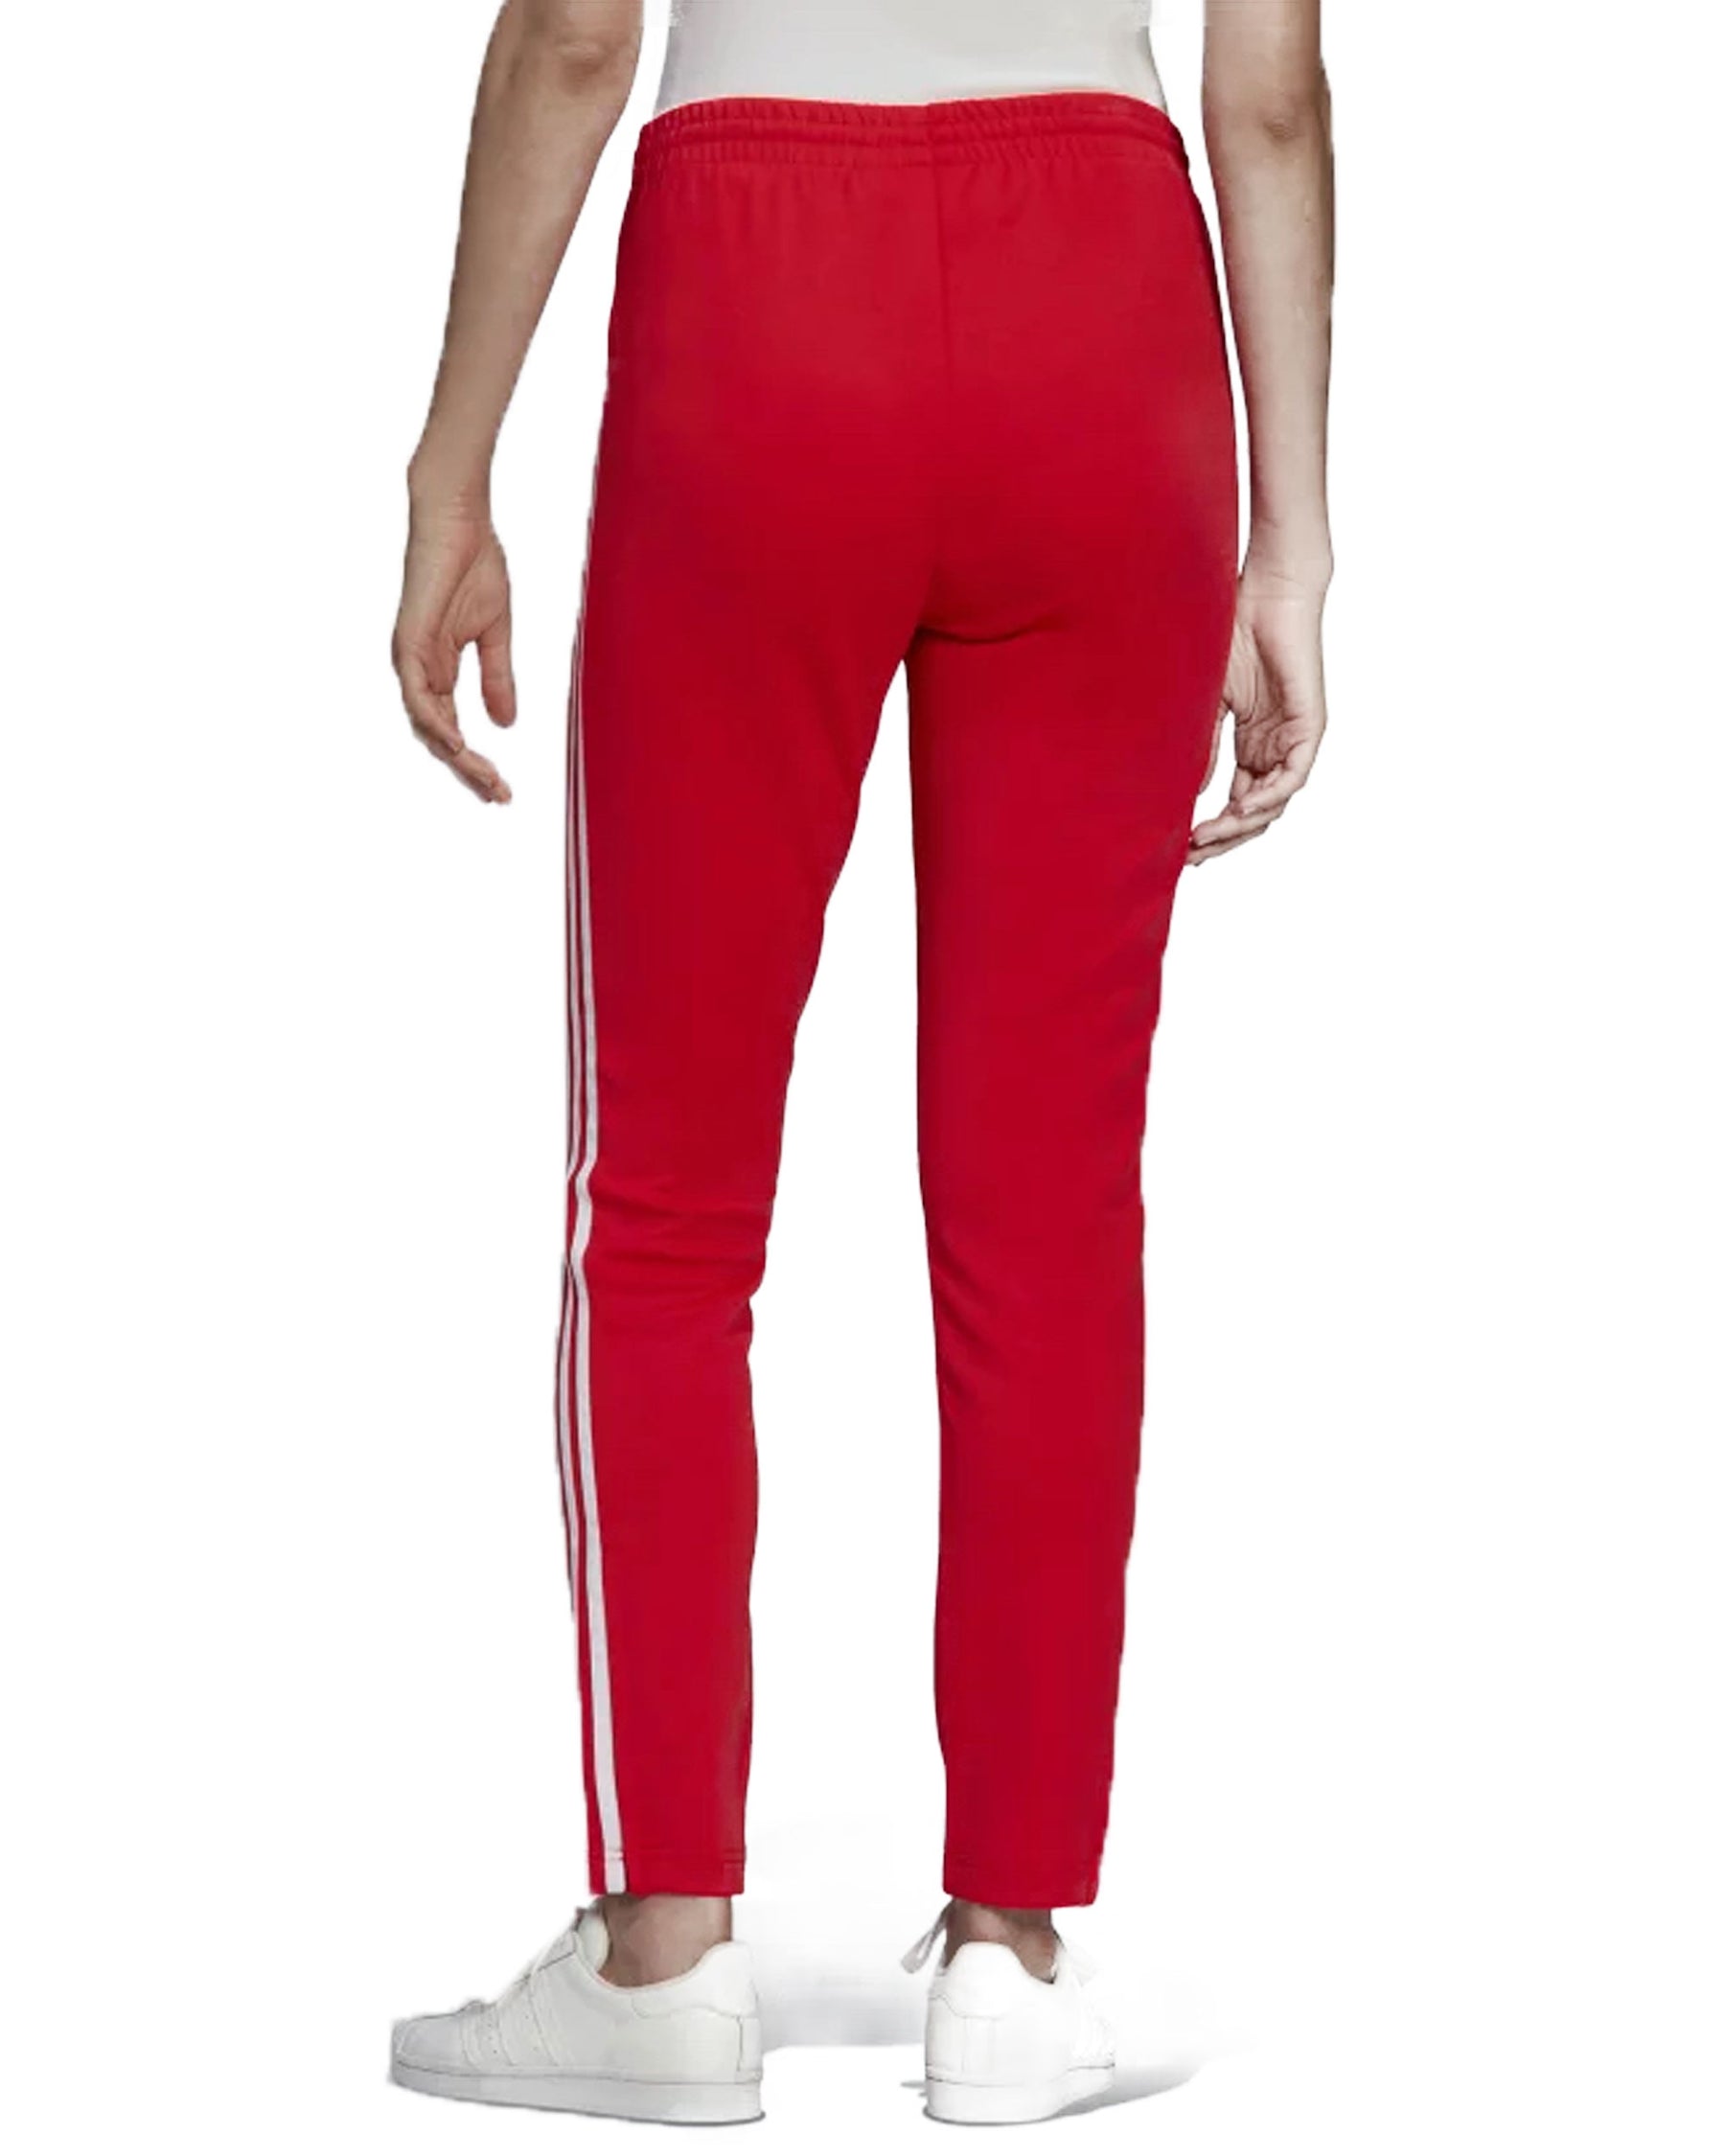 Pantalone Donna Adidas Superstar Rosso